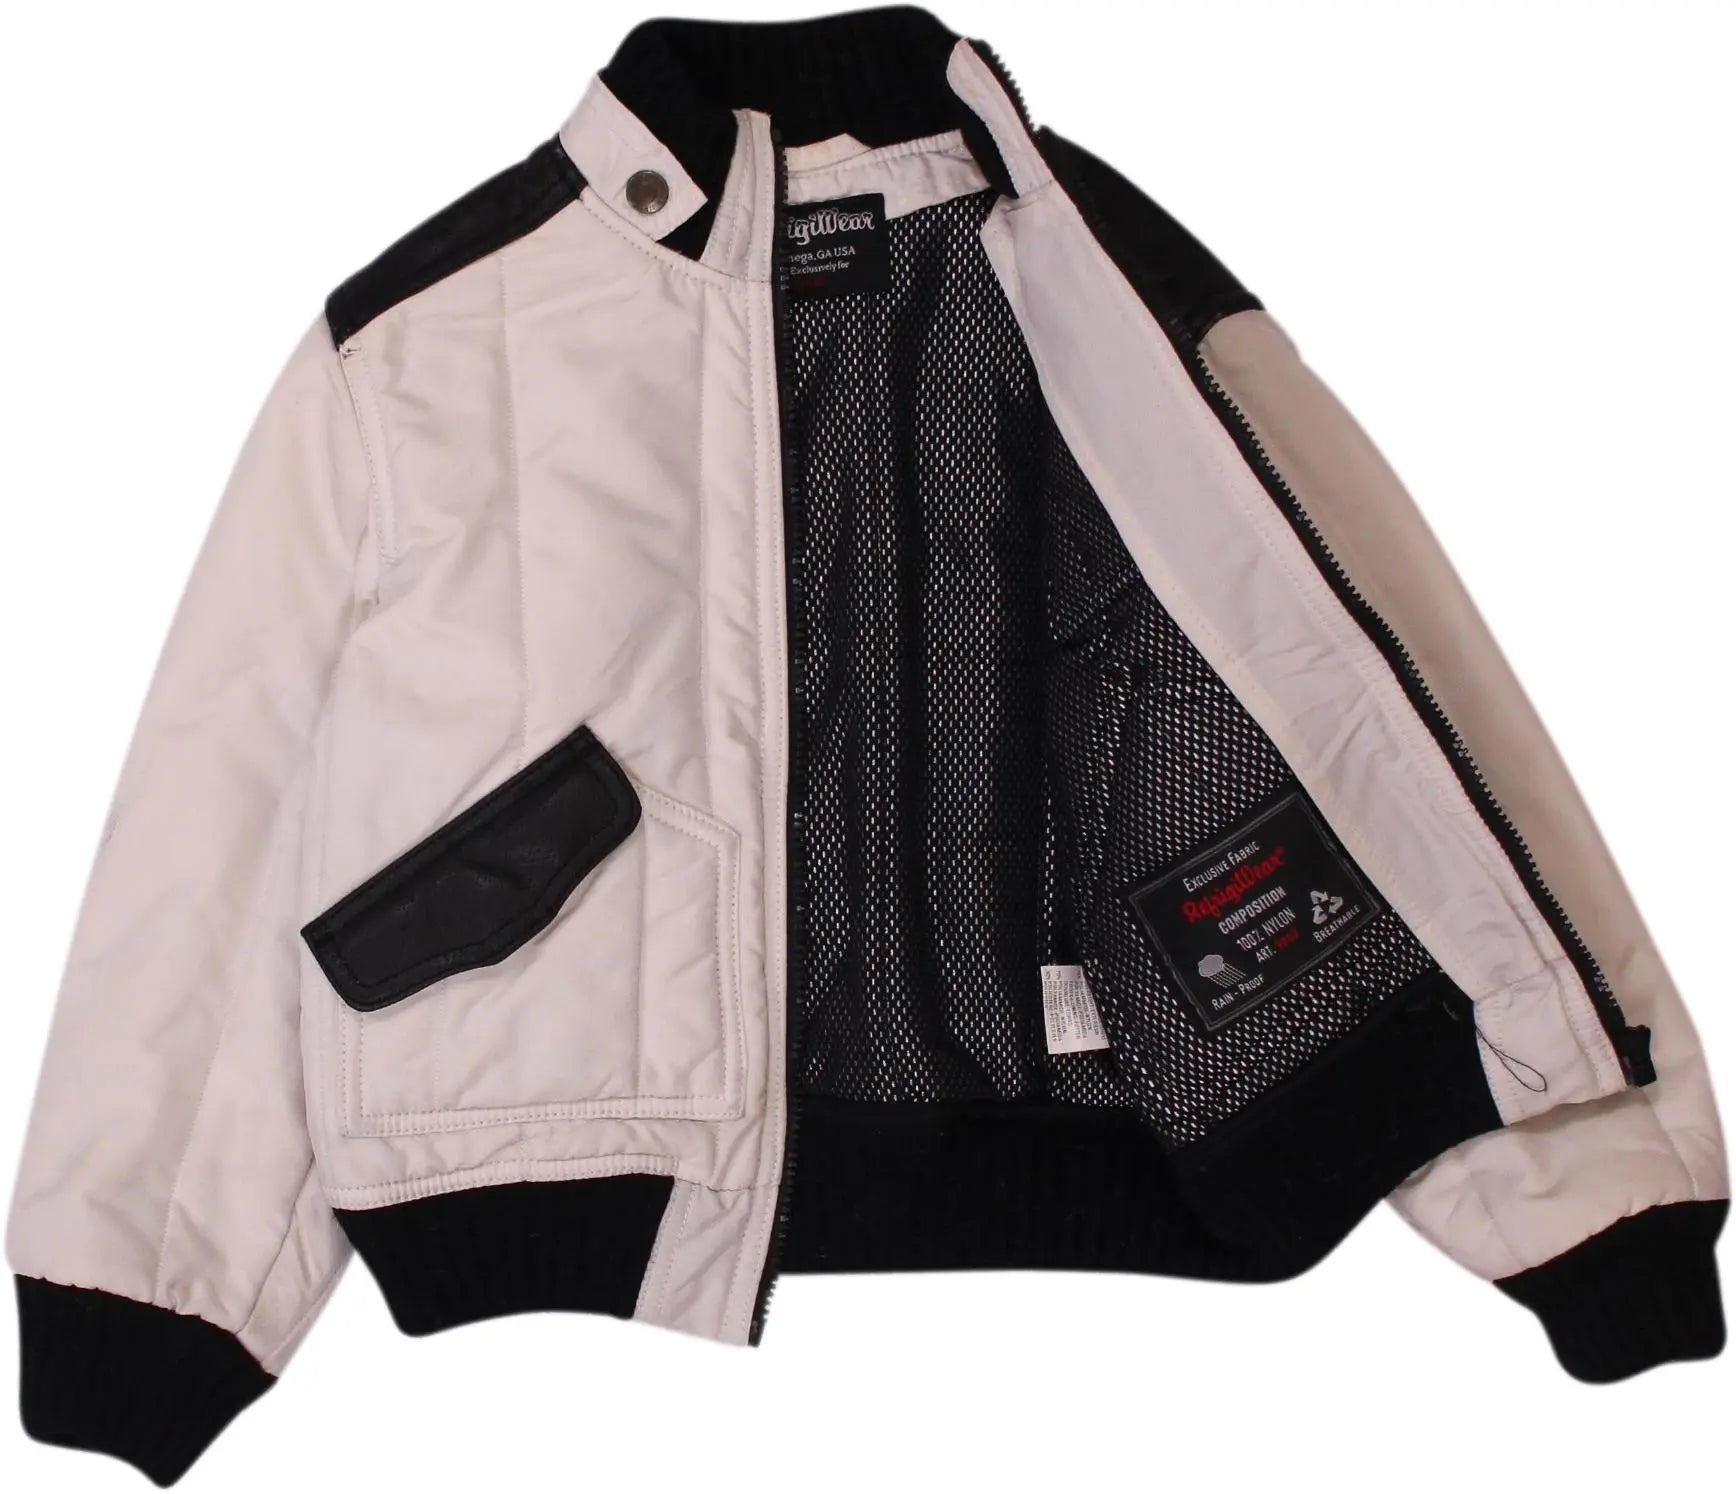 Refrigi Wear - White Jacket- ThriftTale.com - Vintage and second handclothing